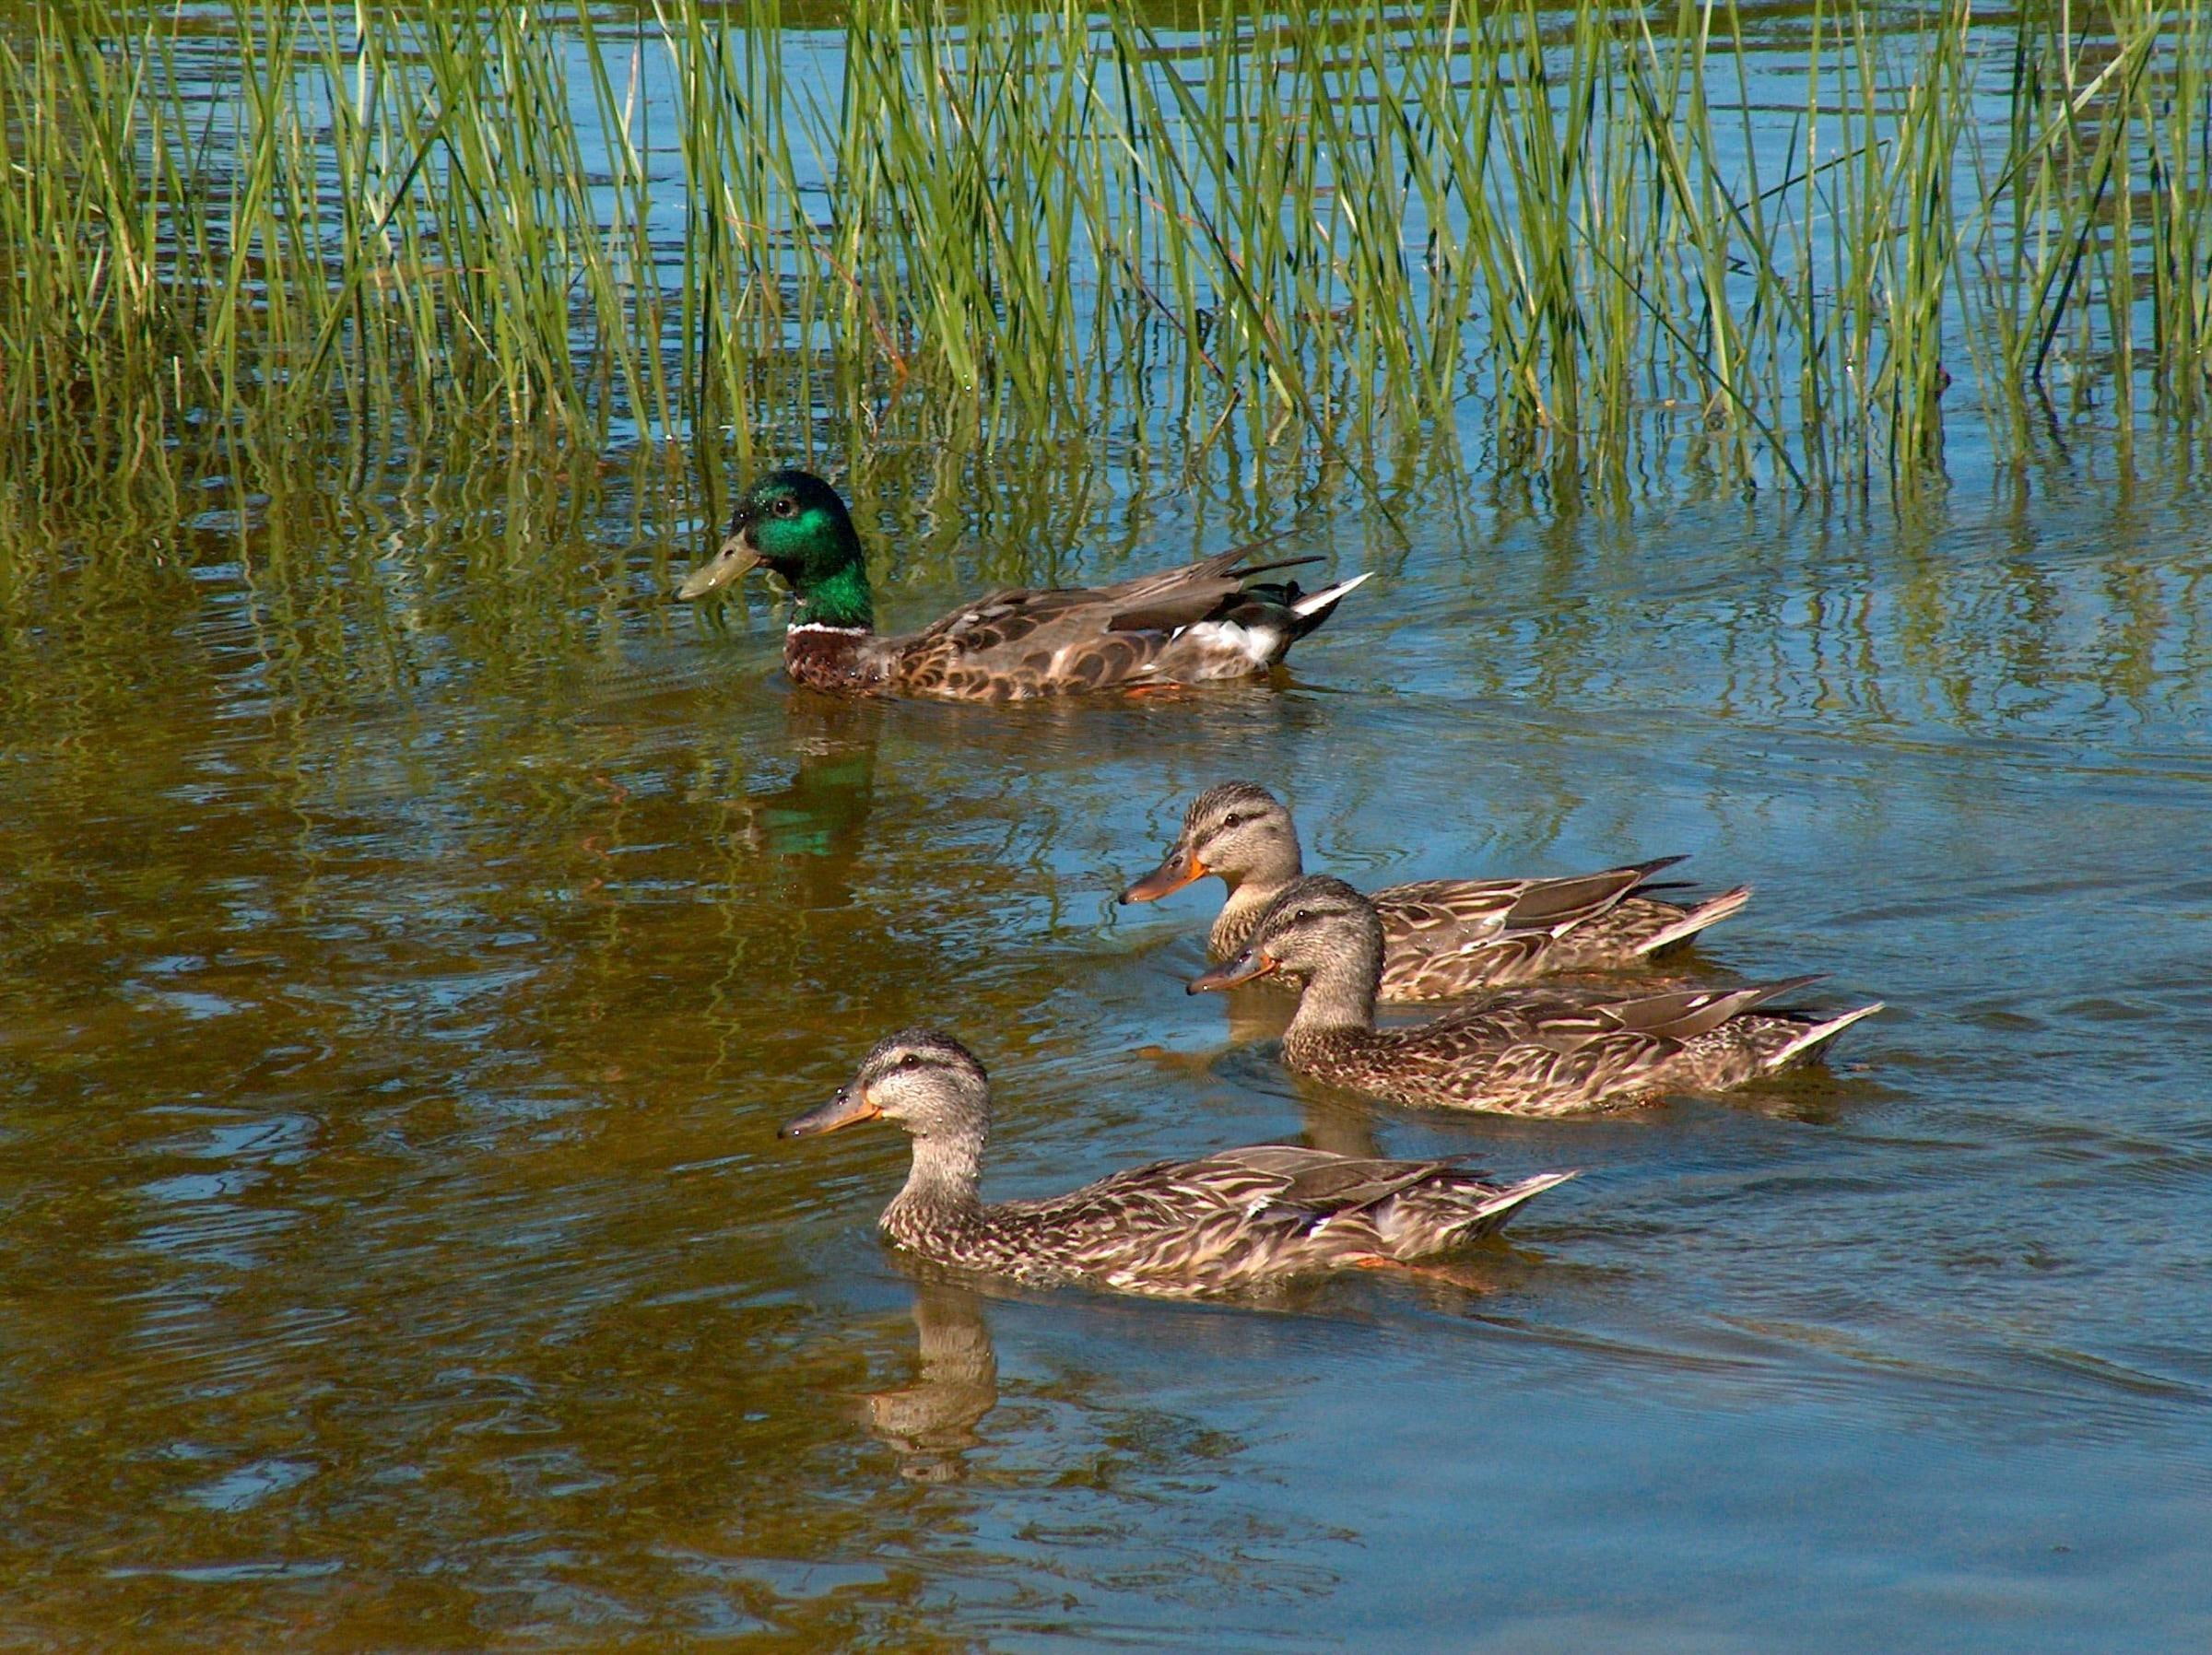 On The Lake, mallard duck, reeds, ducks swimming, animals